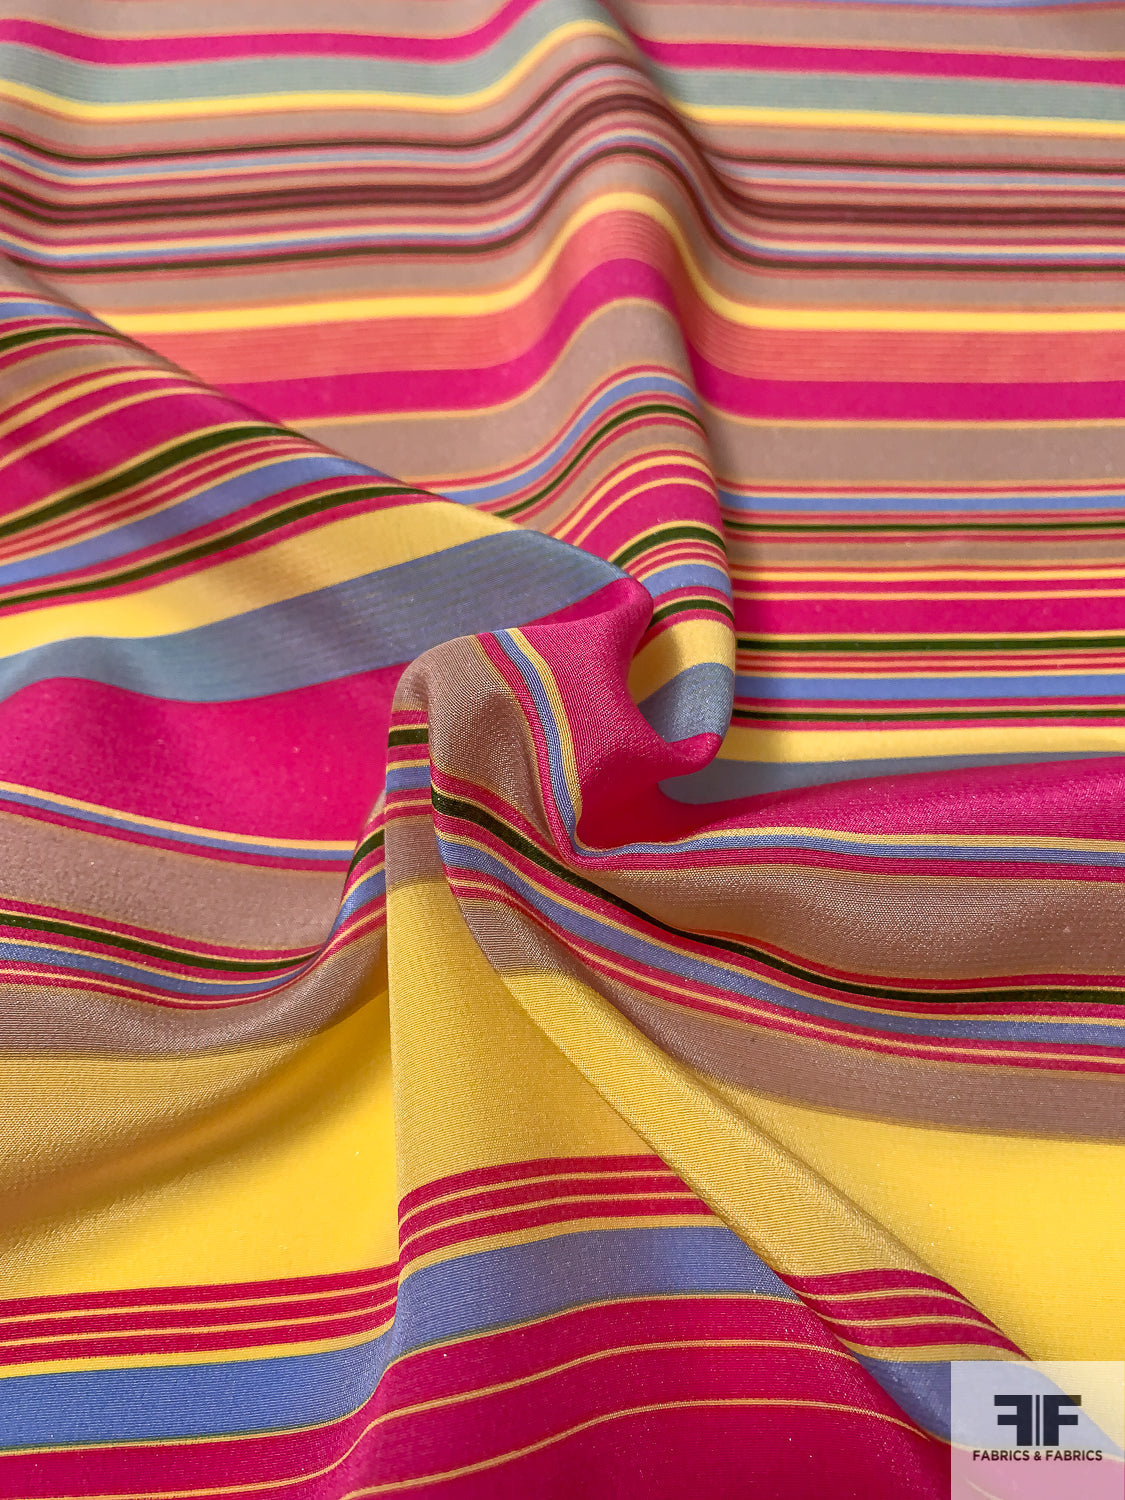 Horizontal Multi-Size Striped Printed Silk Crepe de Chine - Hot Pink / Yellow / Multicolor